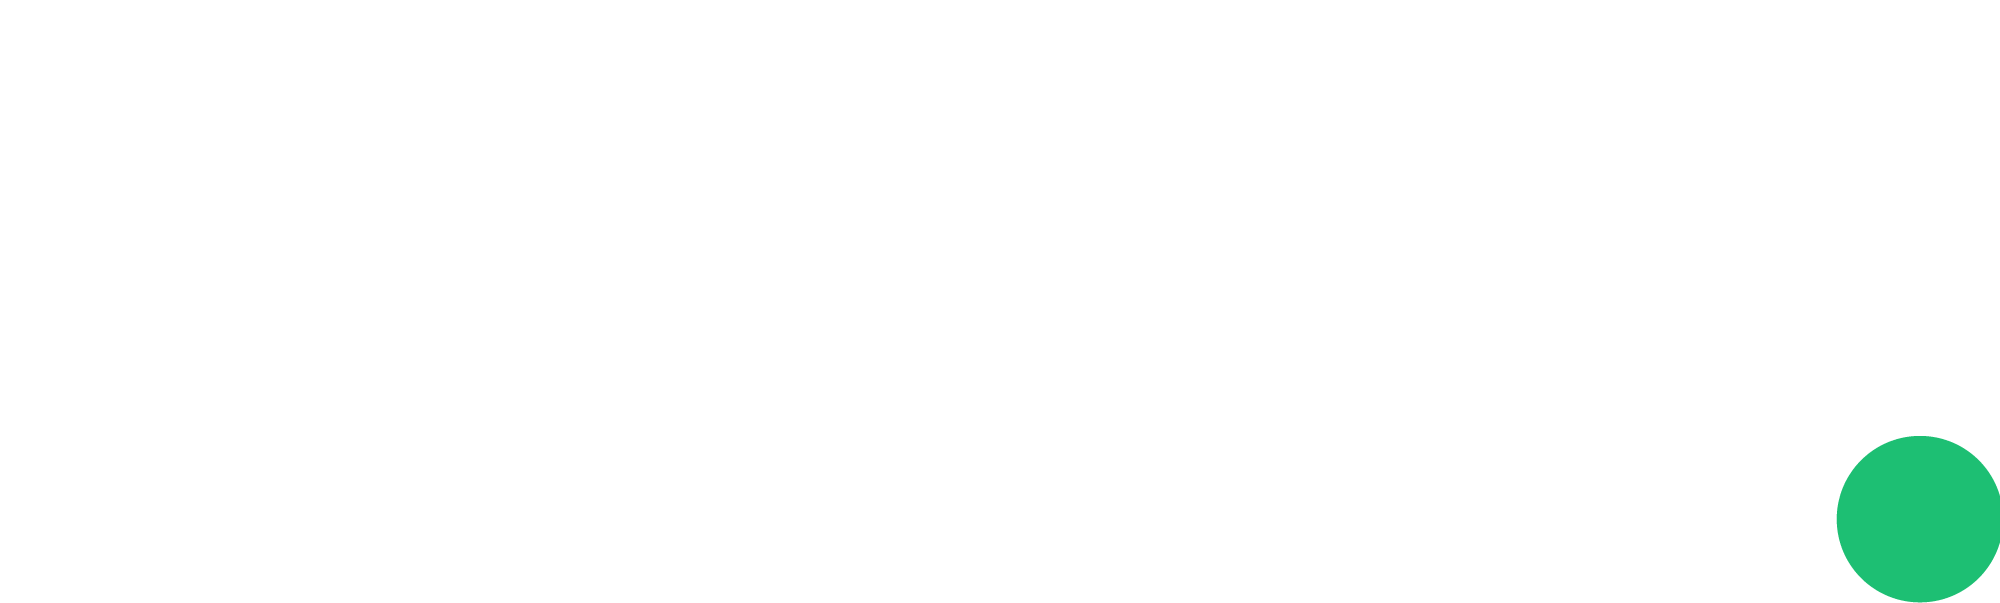 fiverr png logo